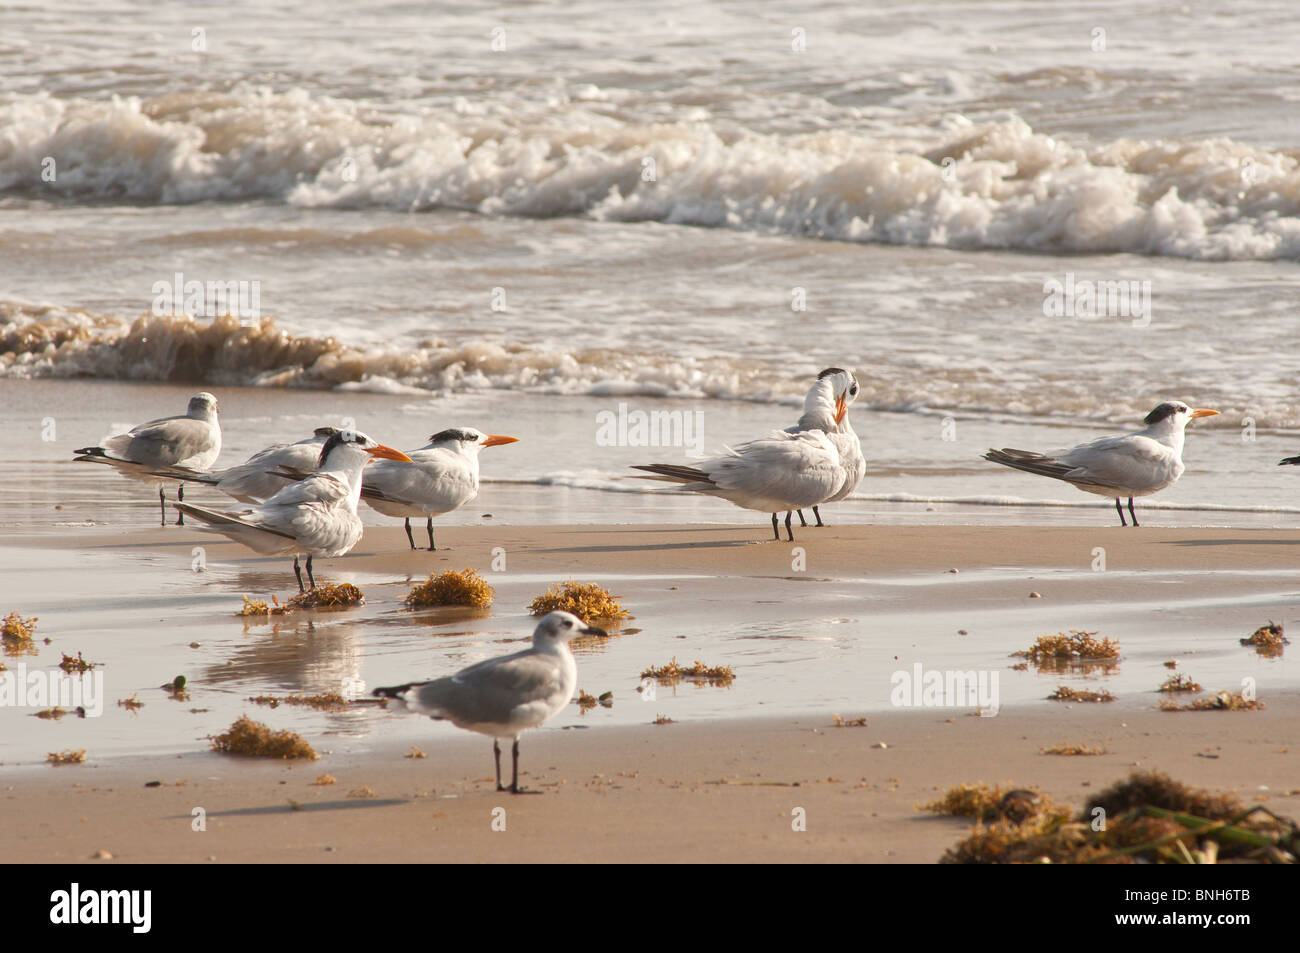 Texas, Padre Island. Terns in Padre Island National Seashore. Stock Photo